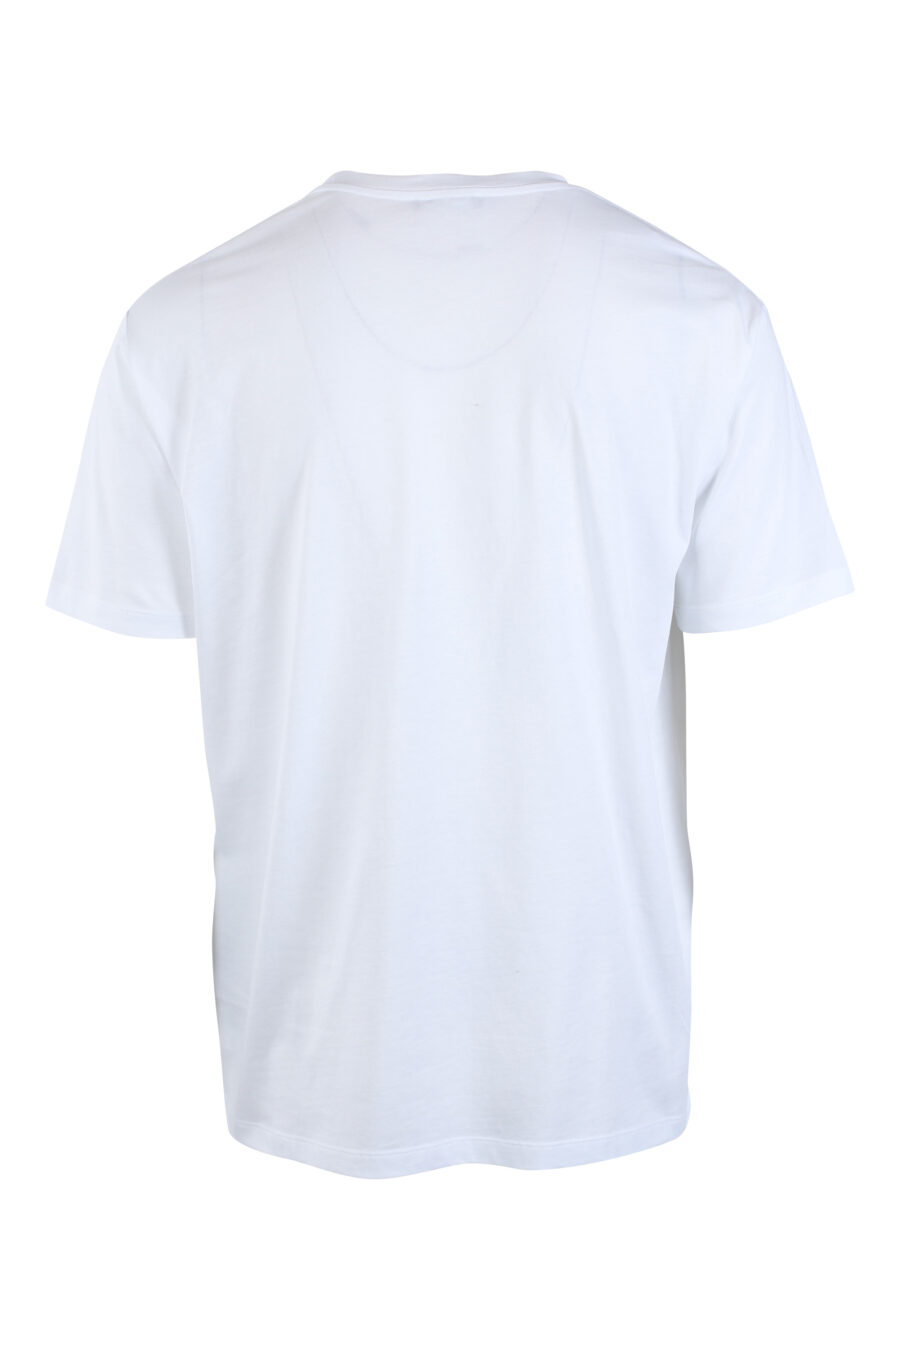 White T-shirt with black "paris" maxilogo - IMG 2608